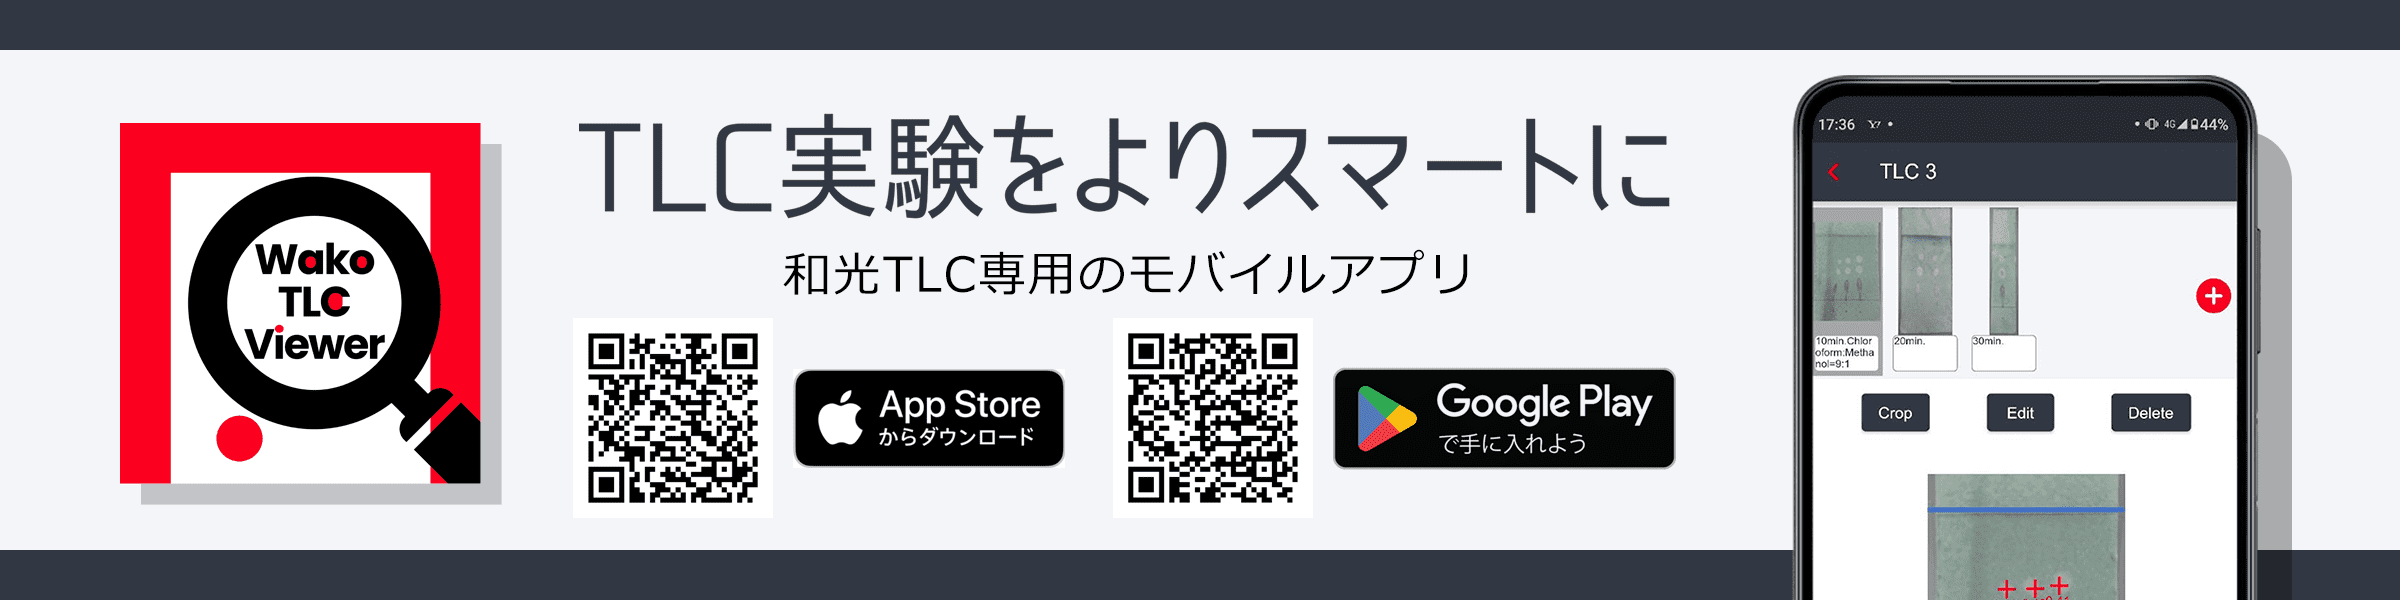 【TLC専用モバイルアプリ】Wako TLC Viewer